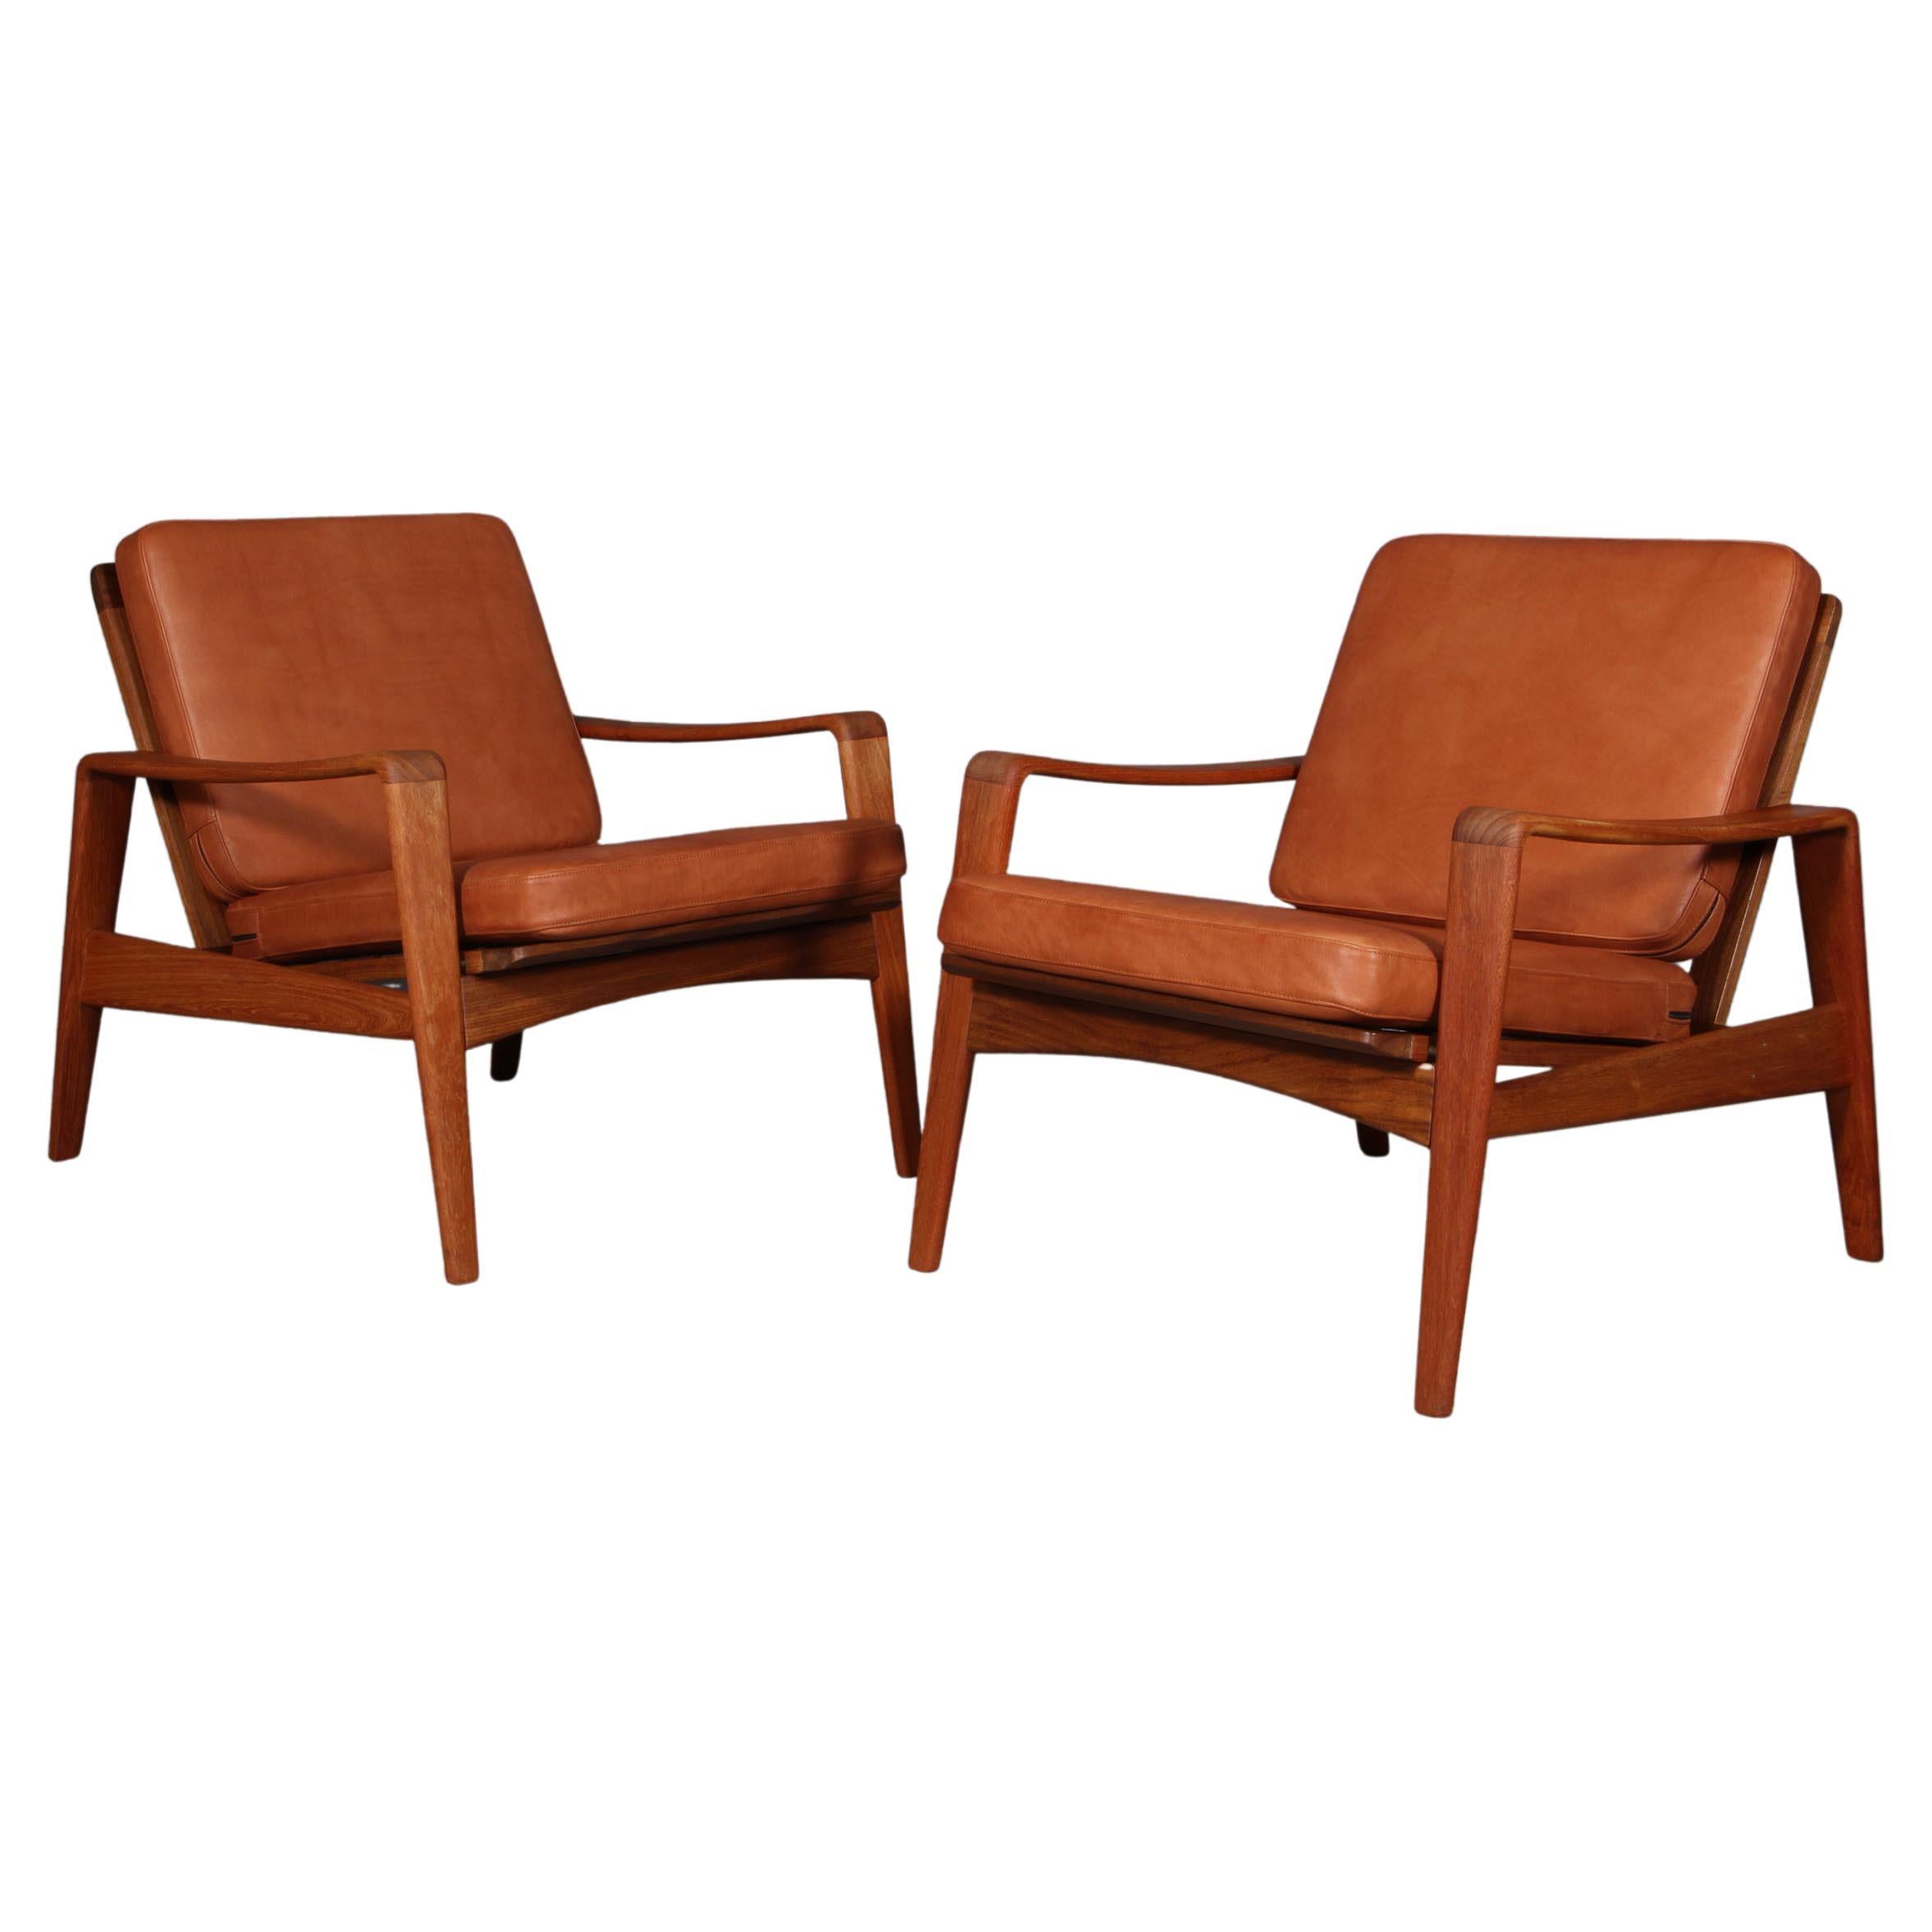 Arne Wahl Iversen, Set of Lounge Chairs